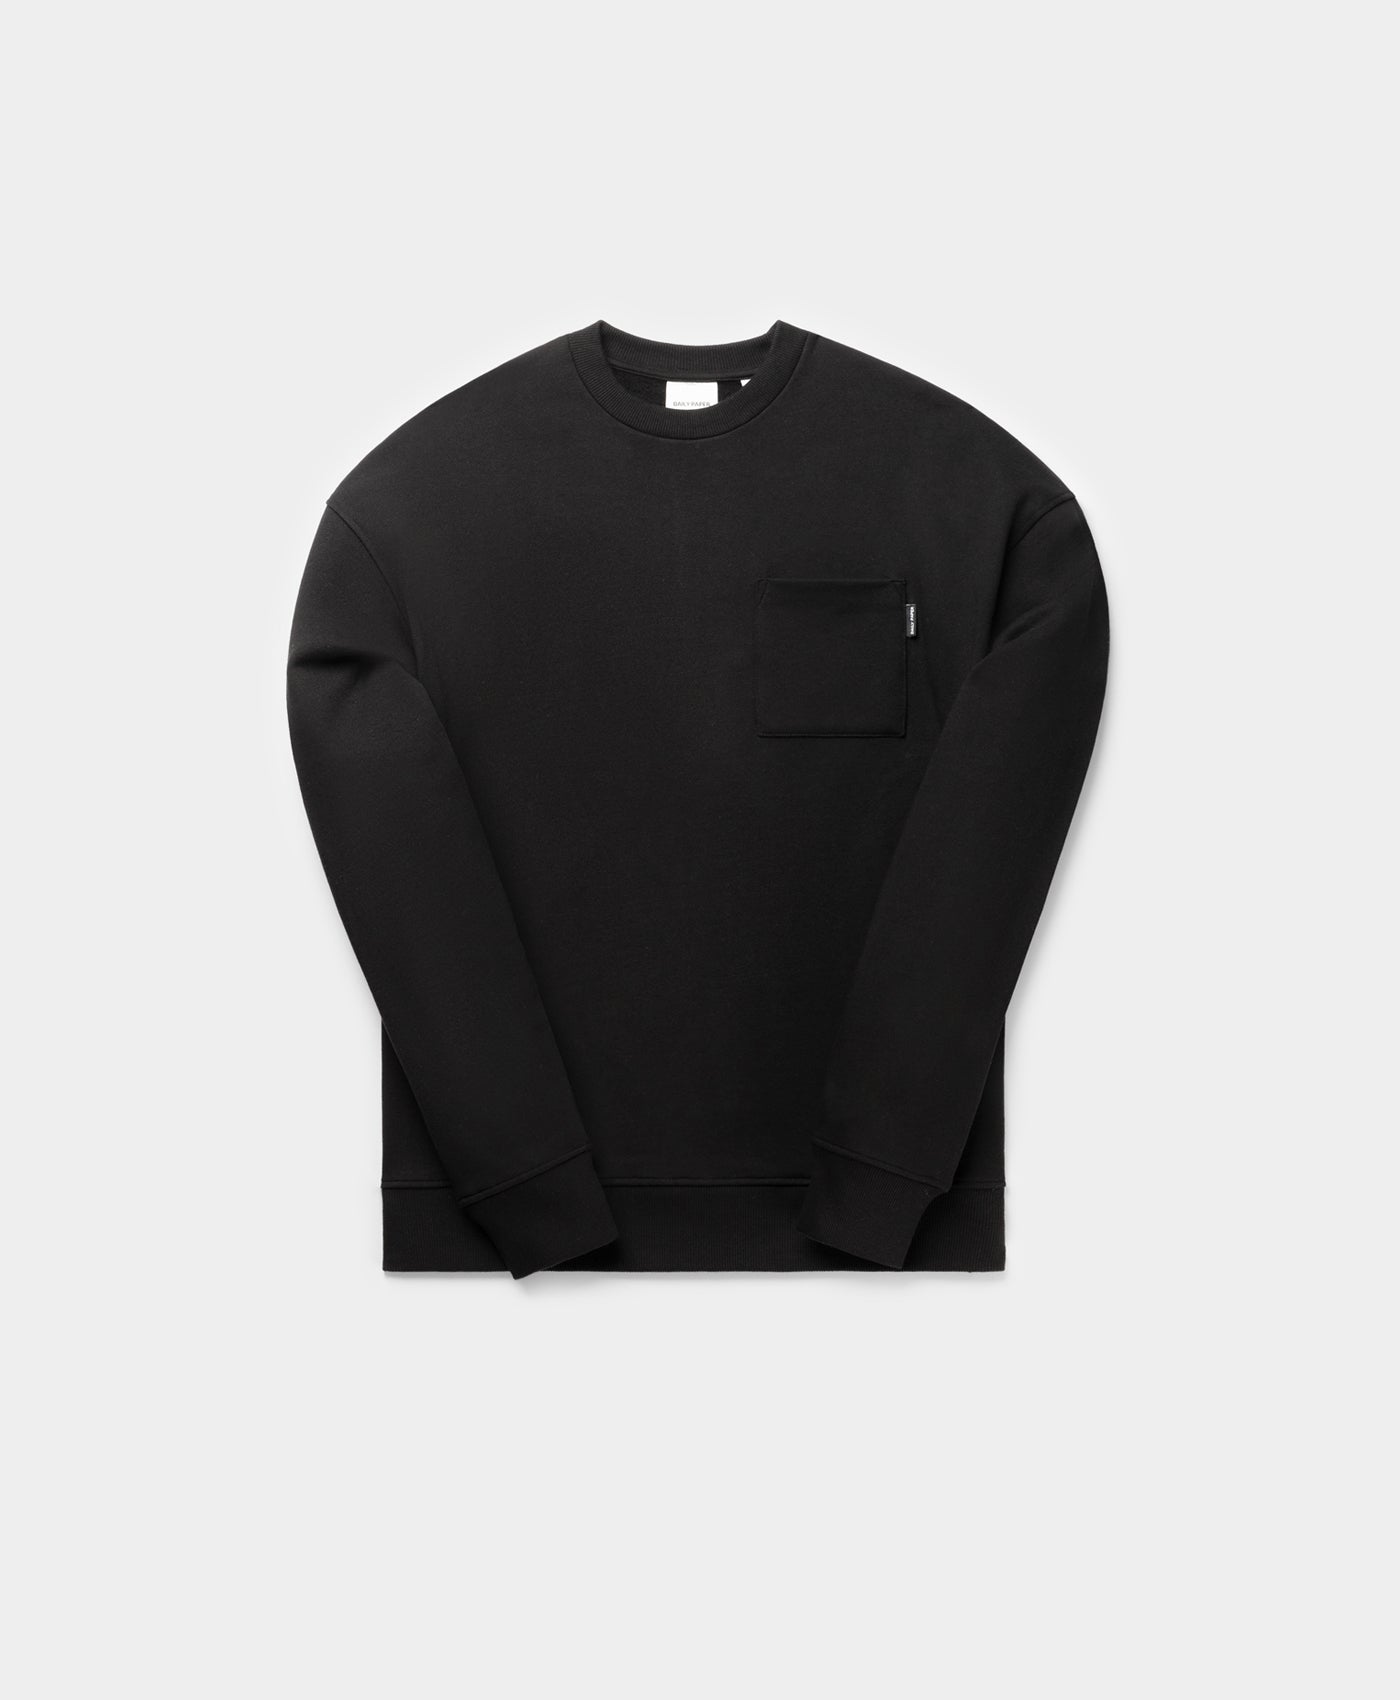 DP - Black Enjata Sweater - Packshot - Front